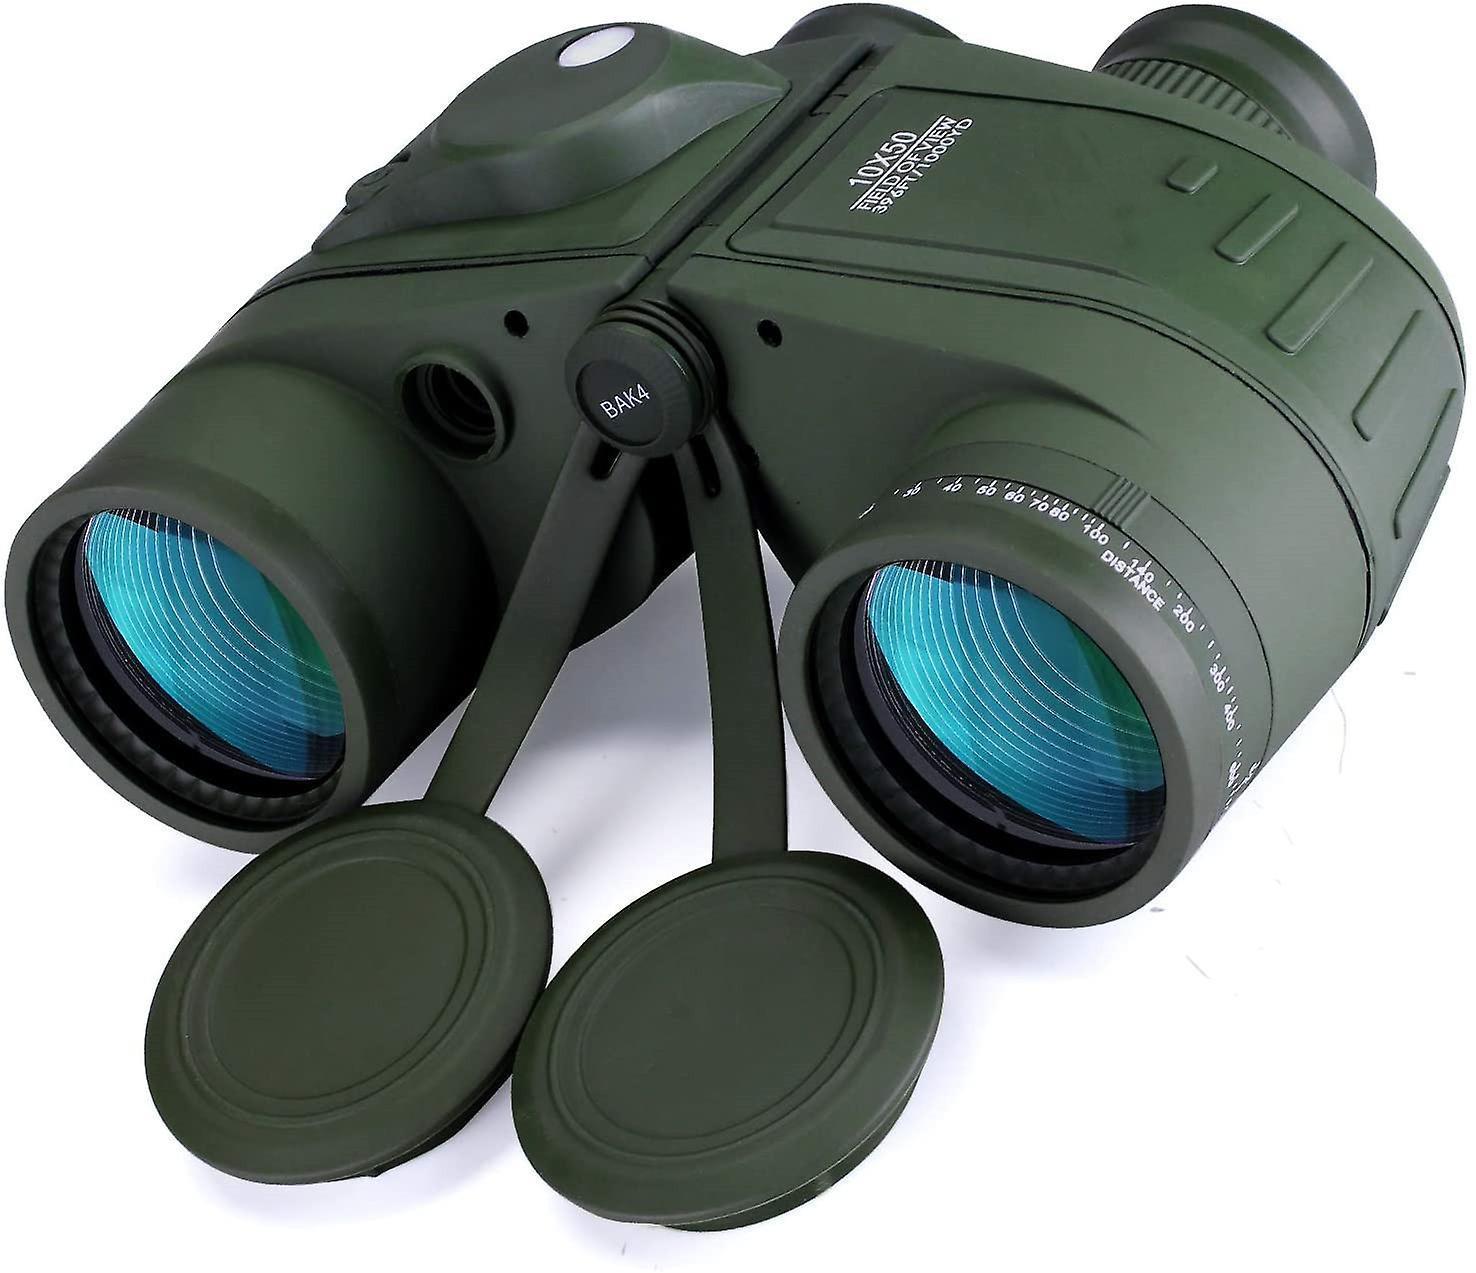 10x50 marine binoculars binoculars with night vision （green）